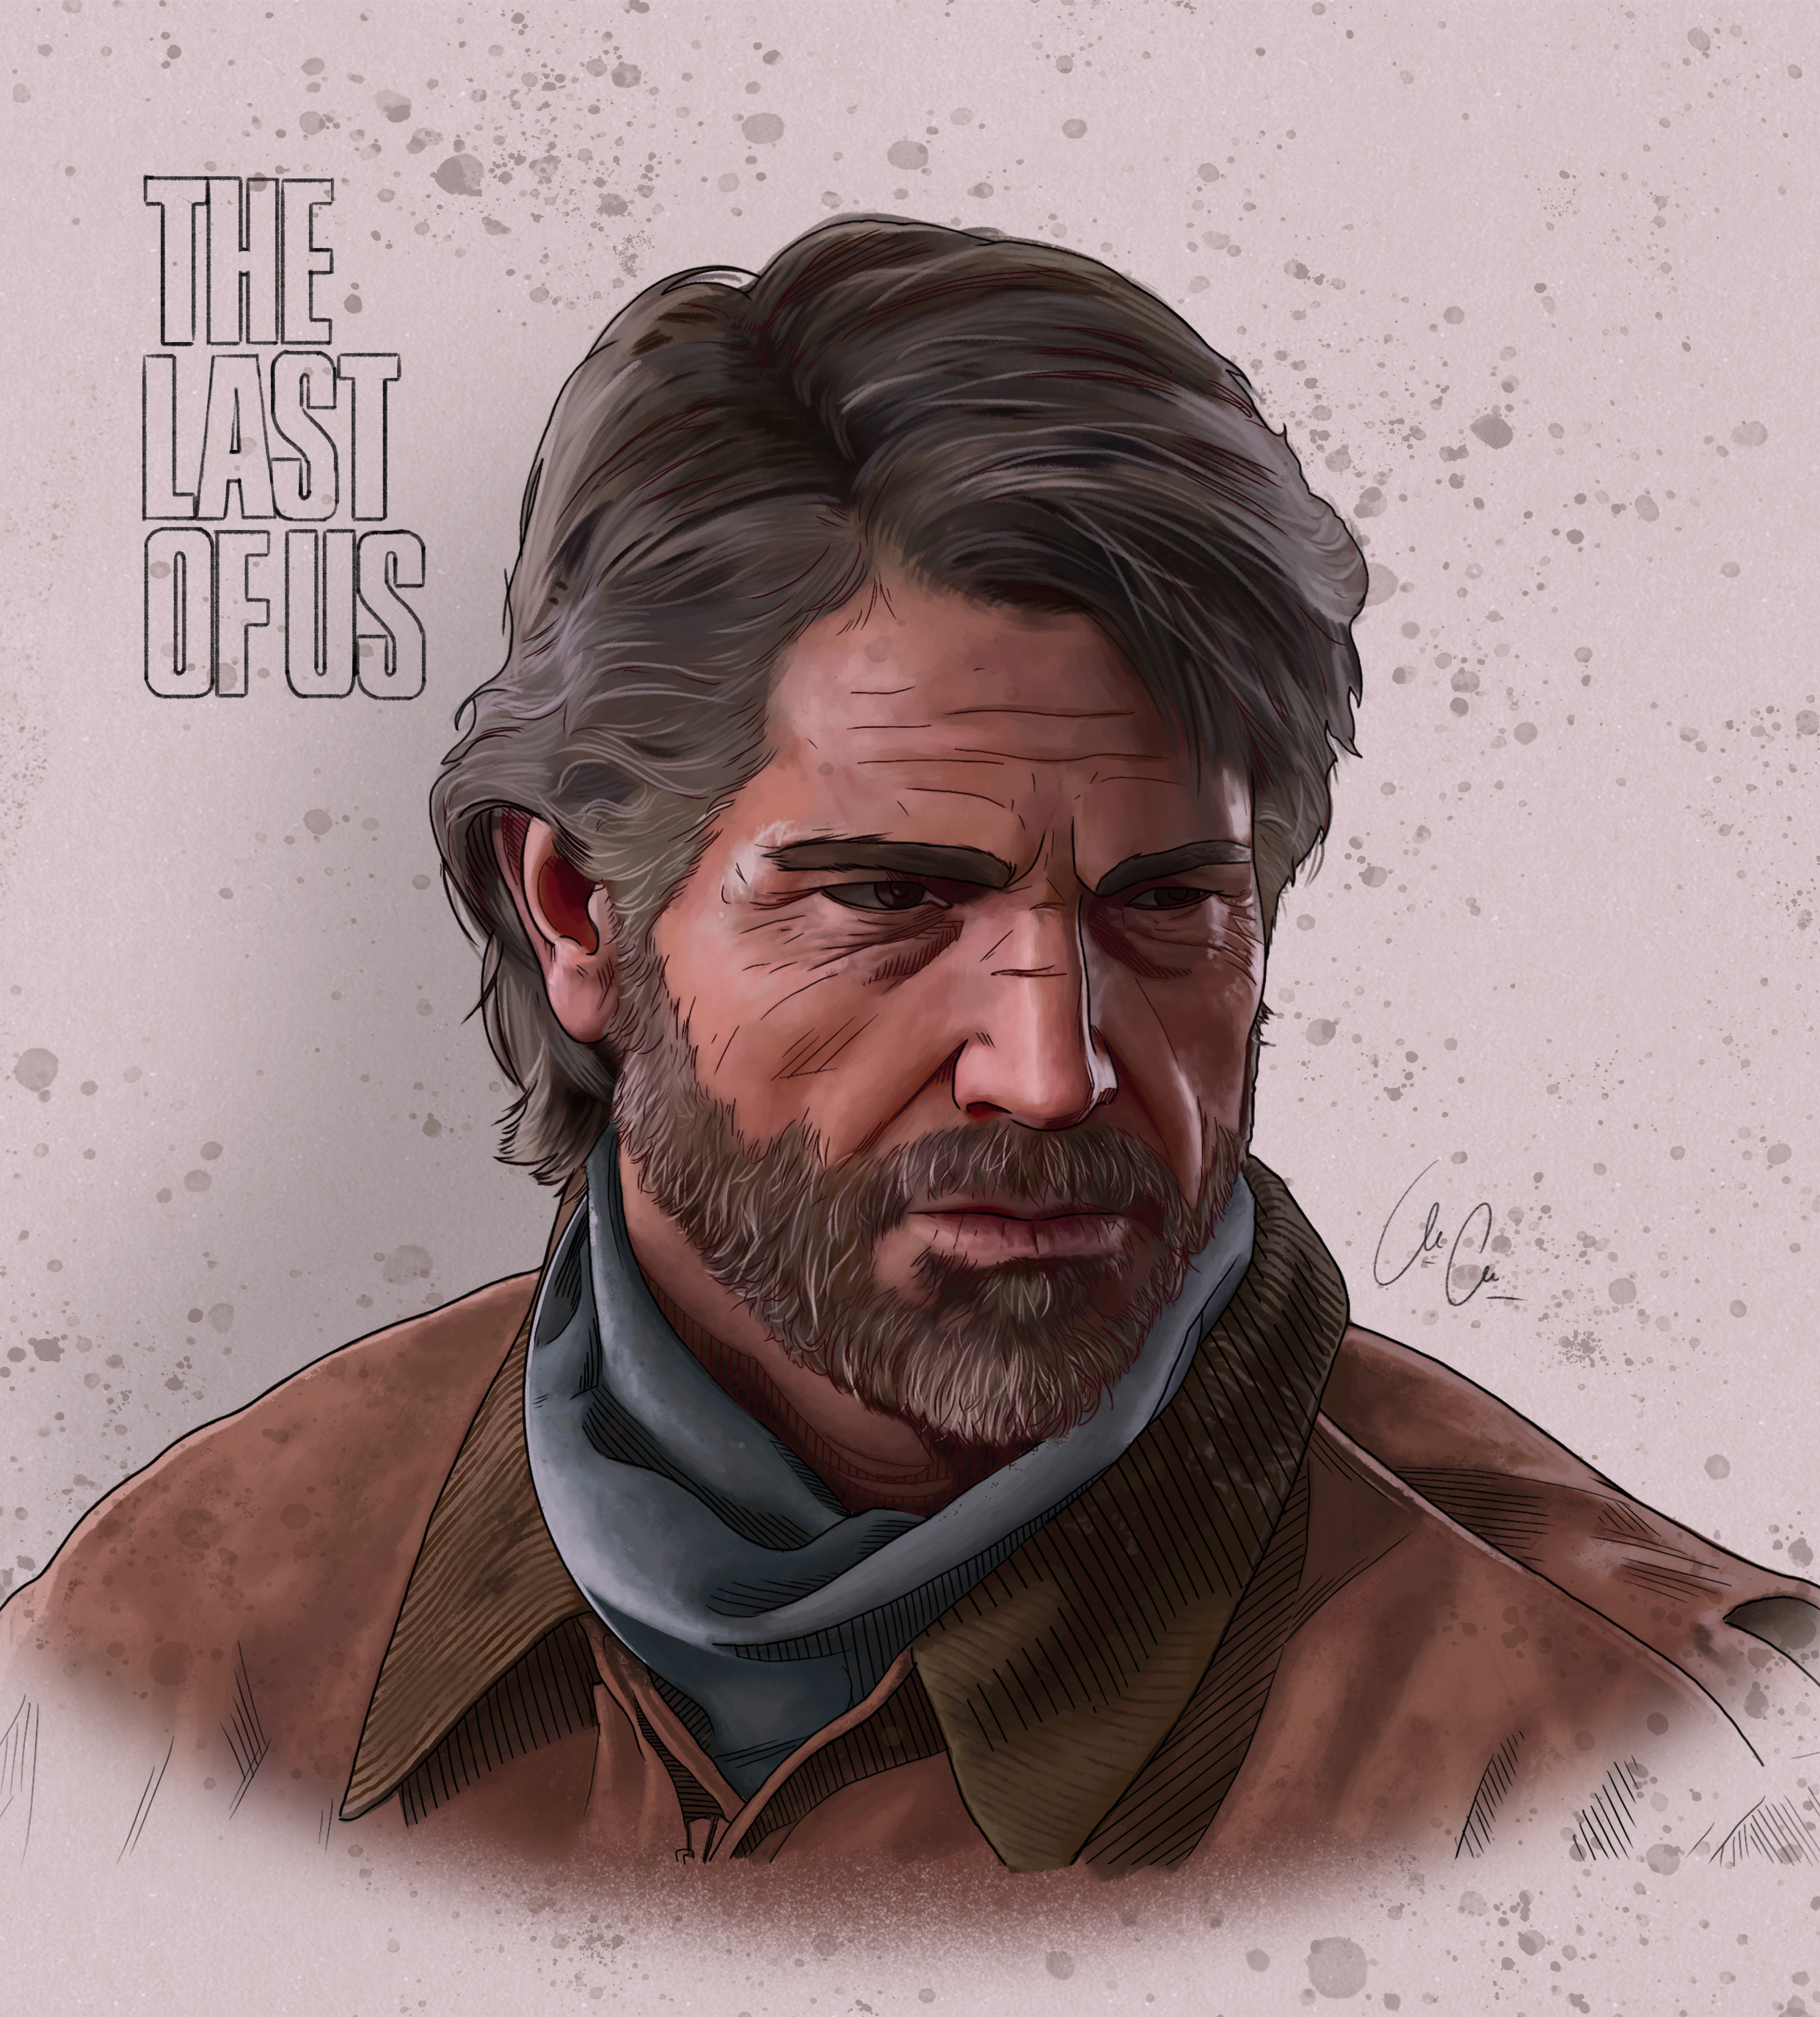 Joel (the last of us) by MCala on DeviantArt